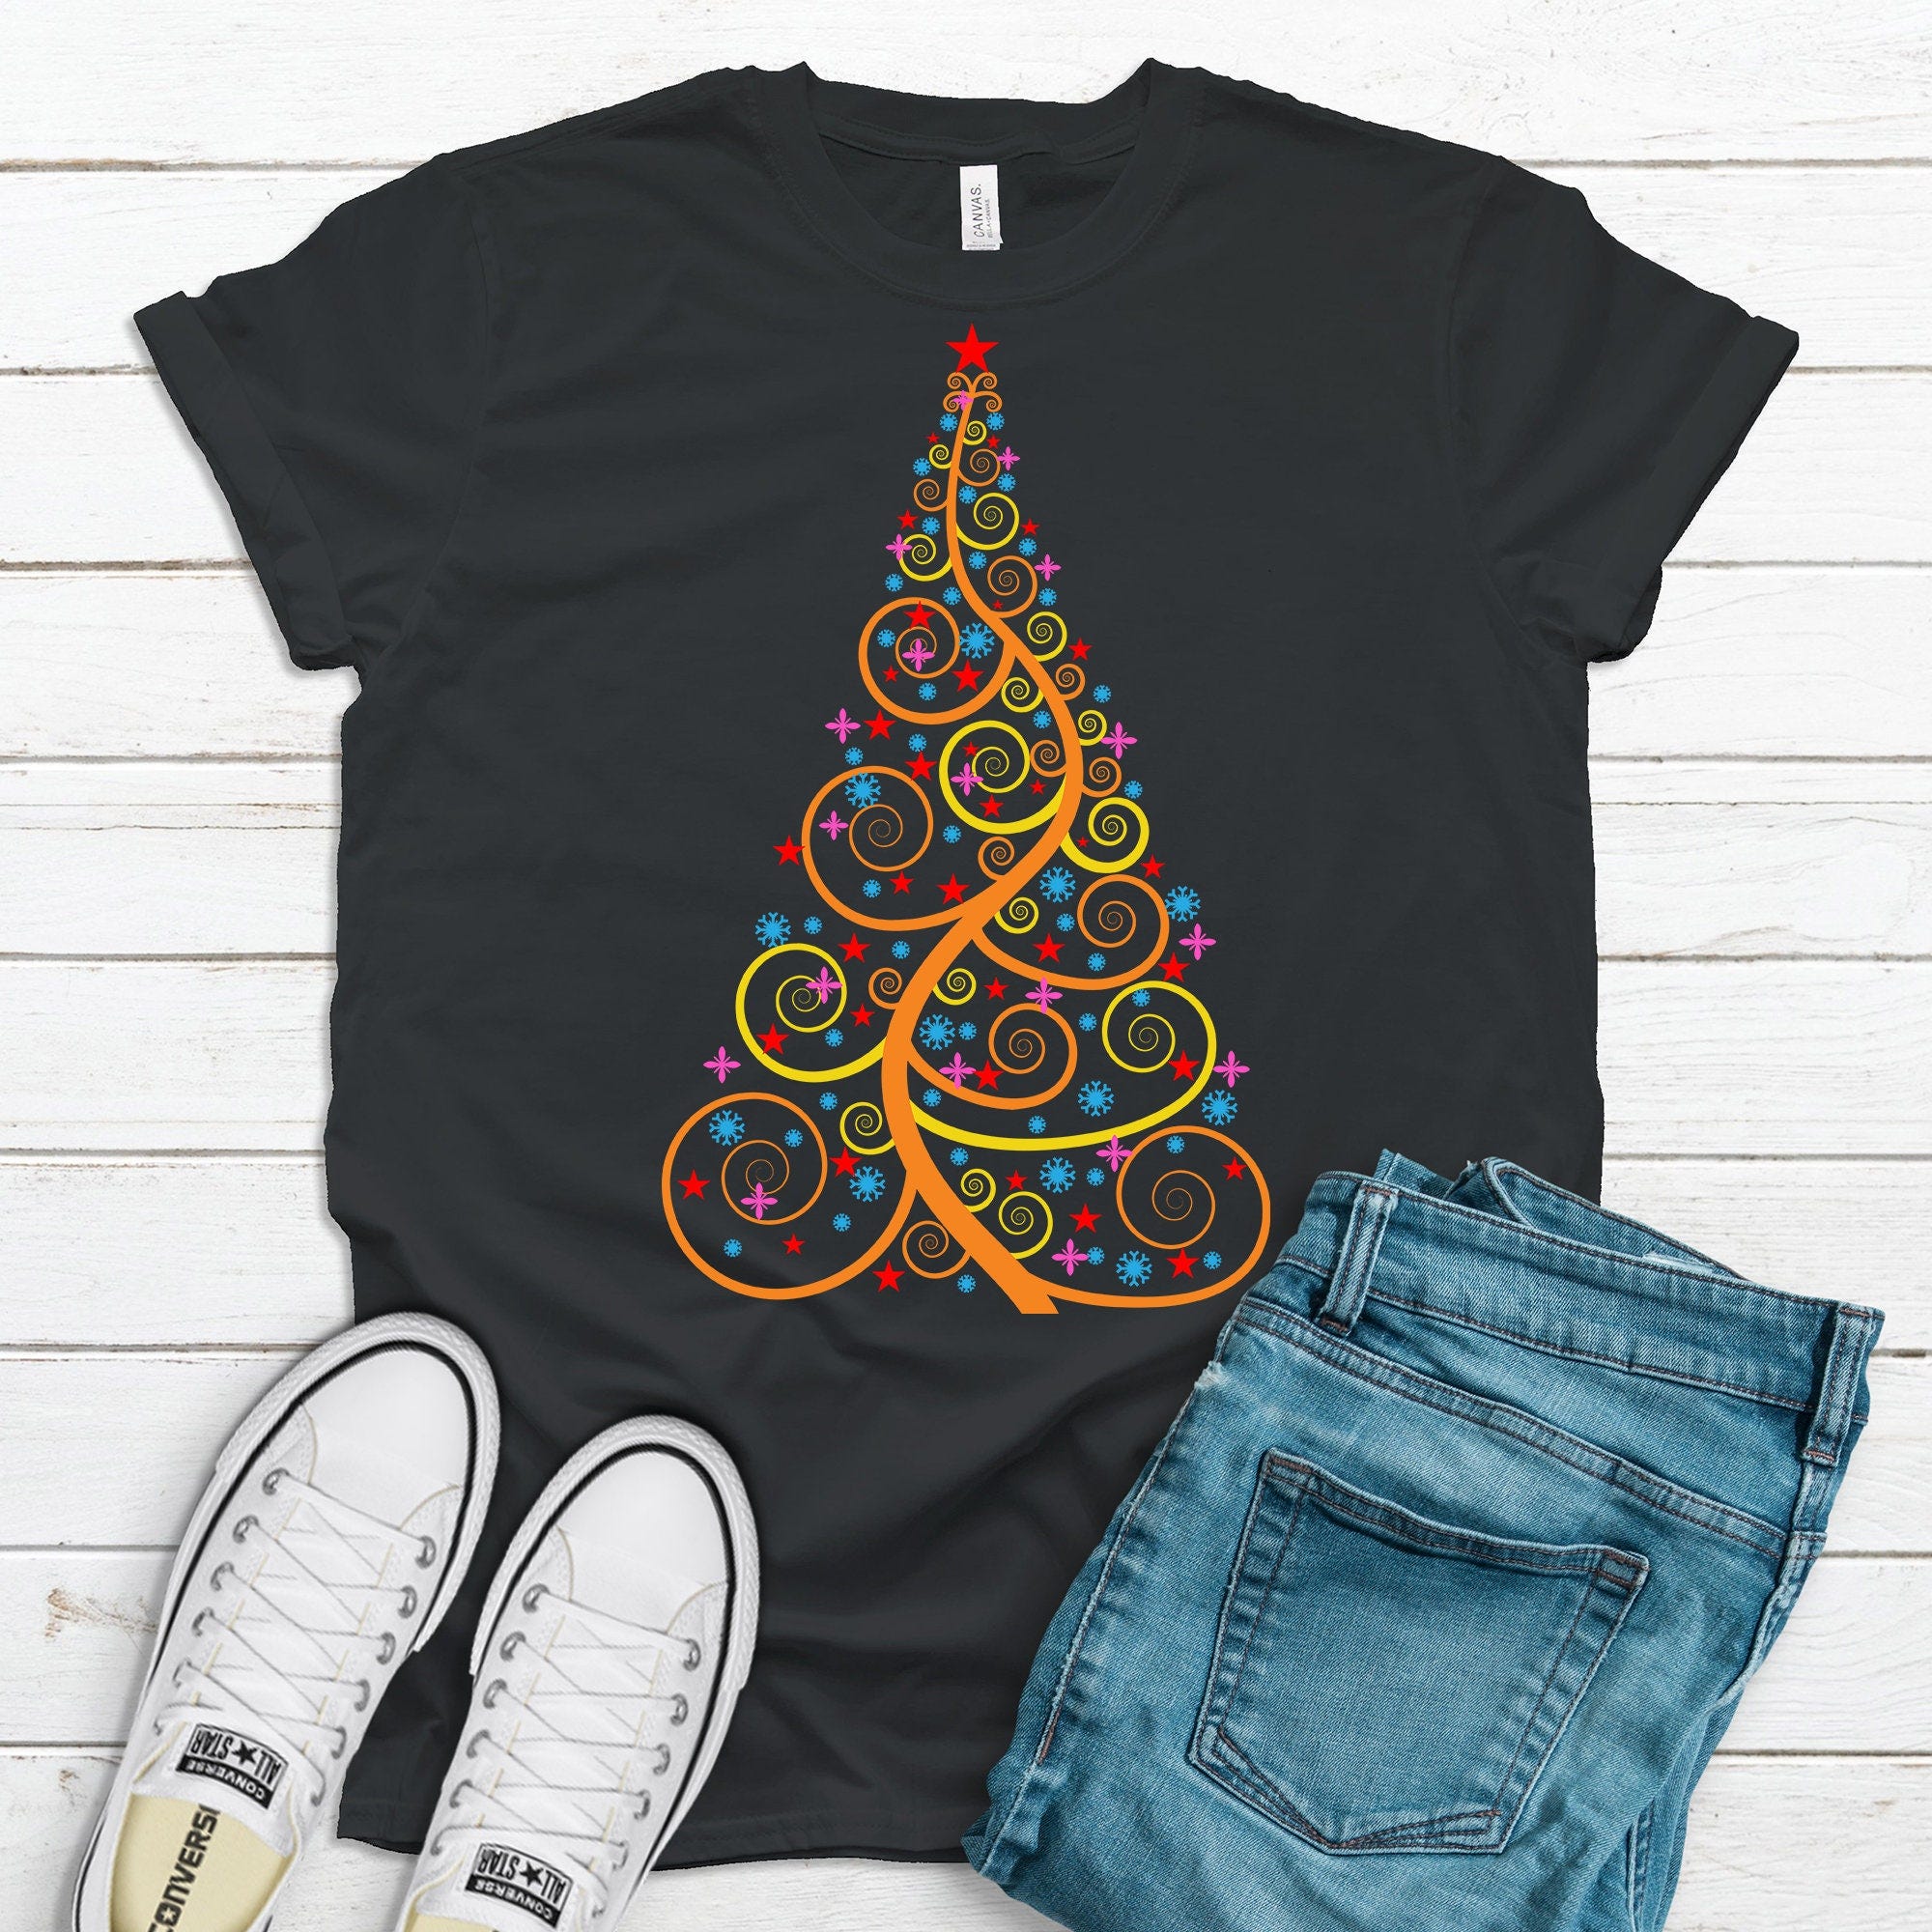 Christmas Shirt, Pretty Spiral Christmas Tree, Orange Tree, Colorful Tree, Choice Of Colors, Premium Soft Tee Shirt, Plus Sizes Available